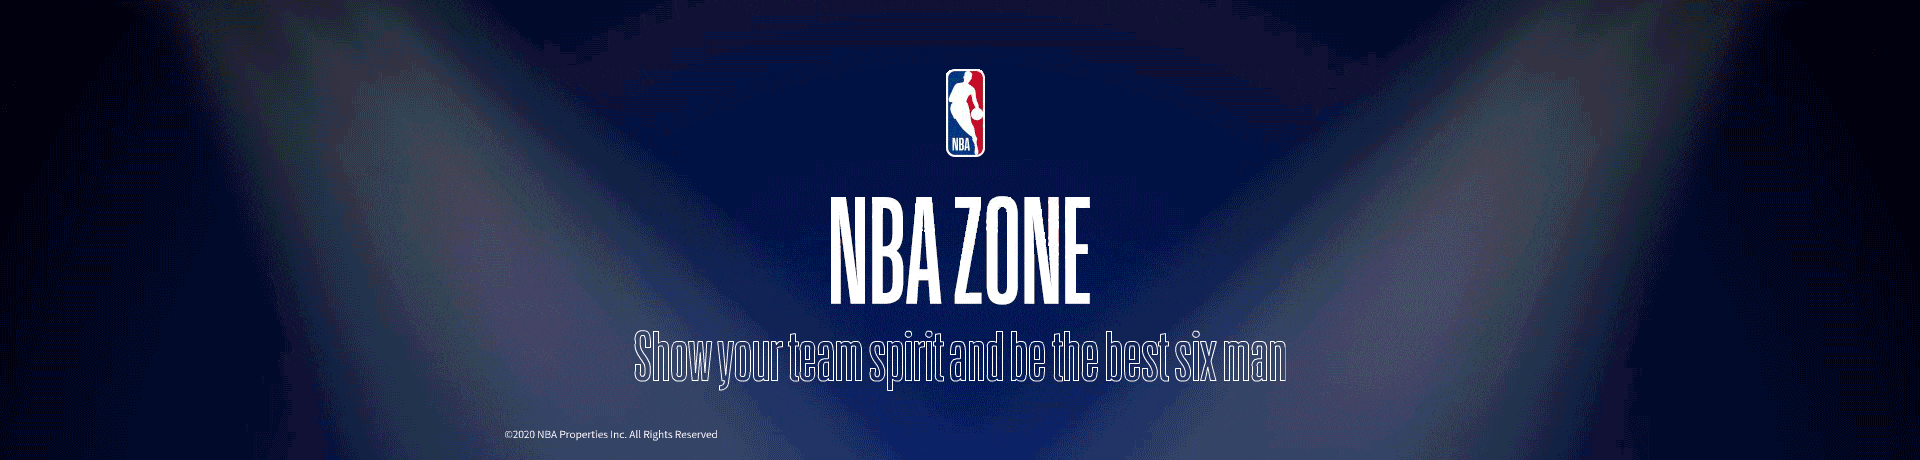 NBA ZONE